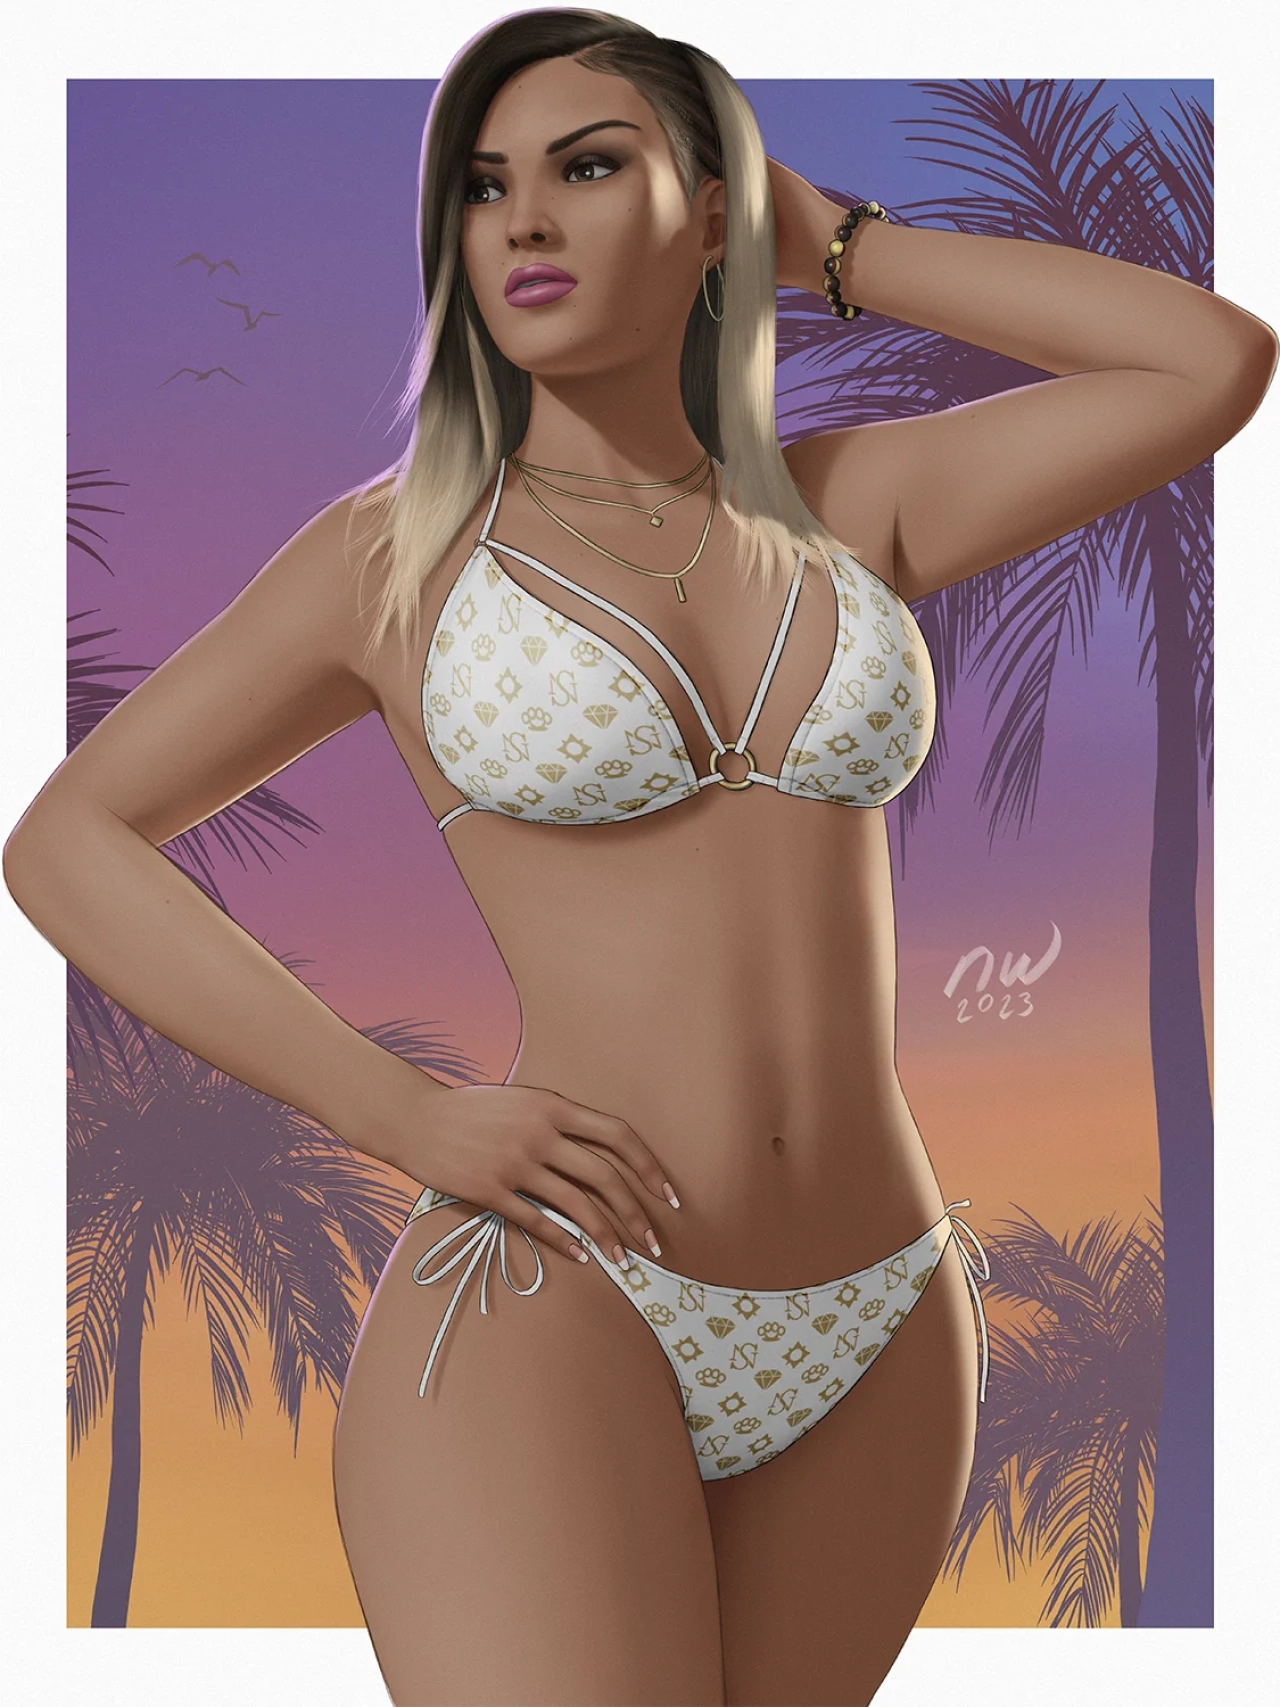 Lucia In A Sessanta Nove Bikini By NastyWiNN3R